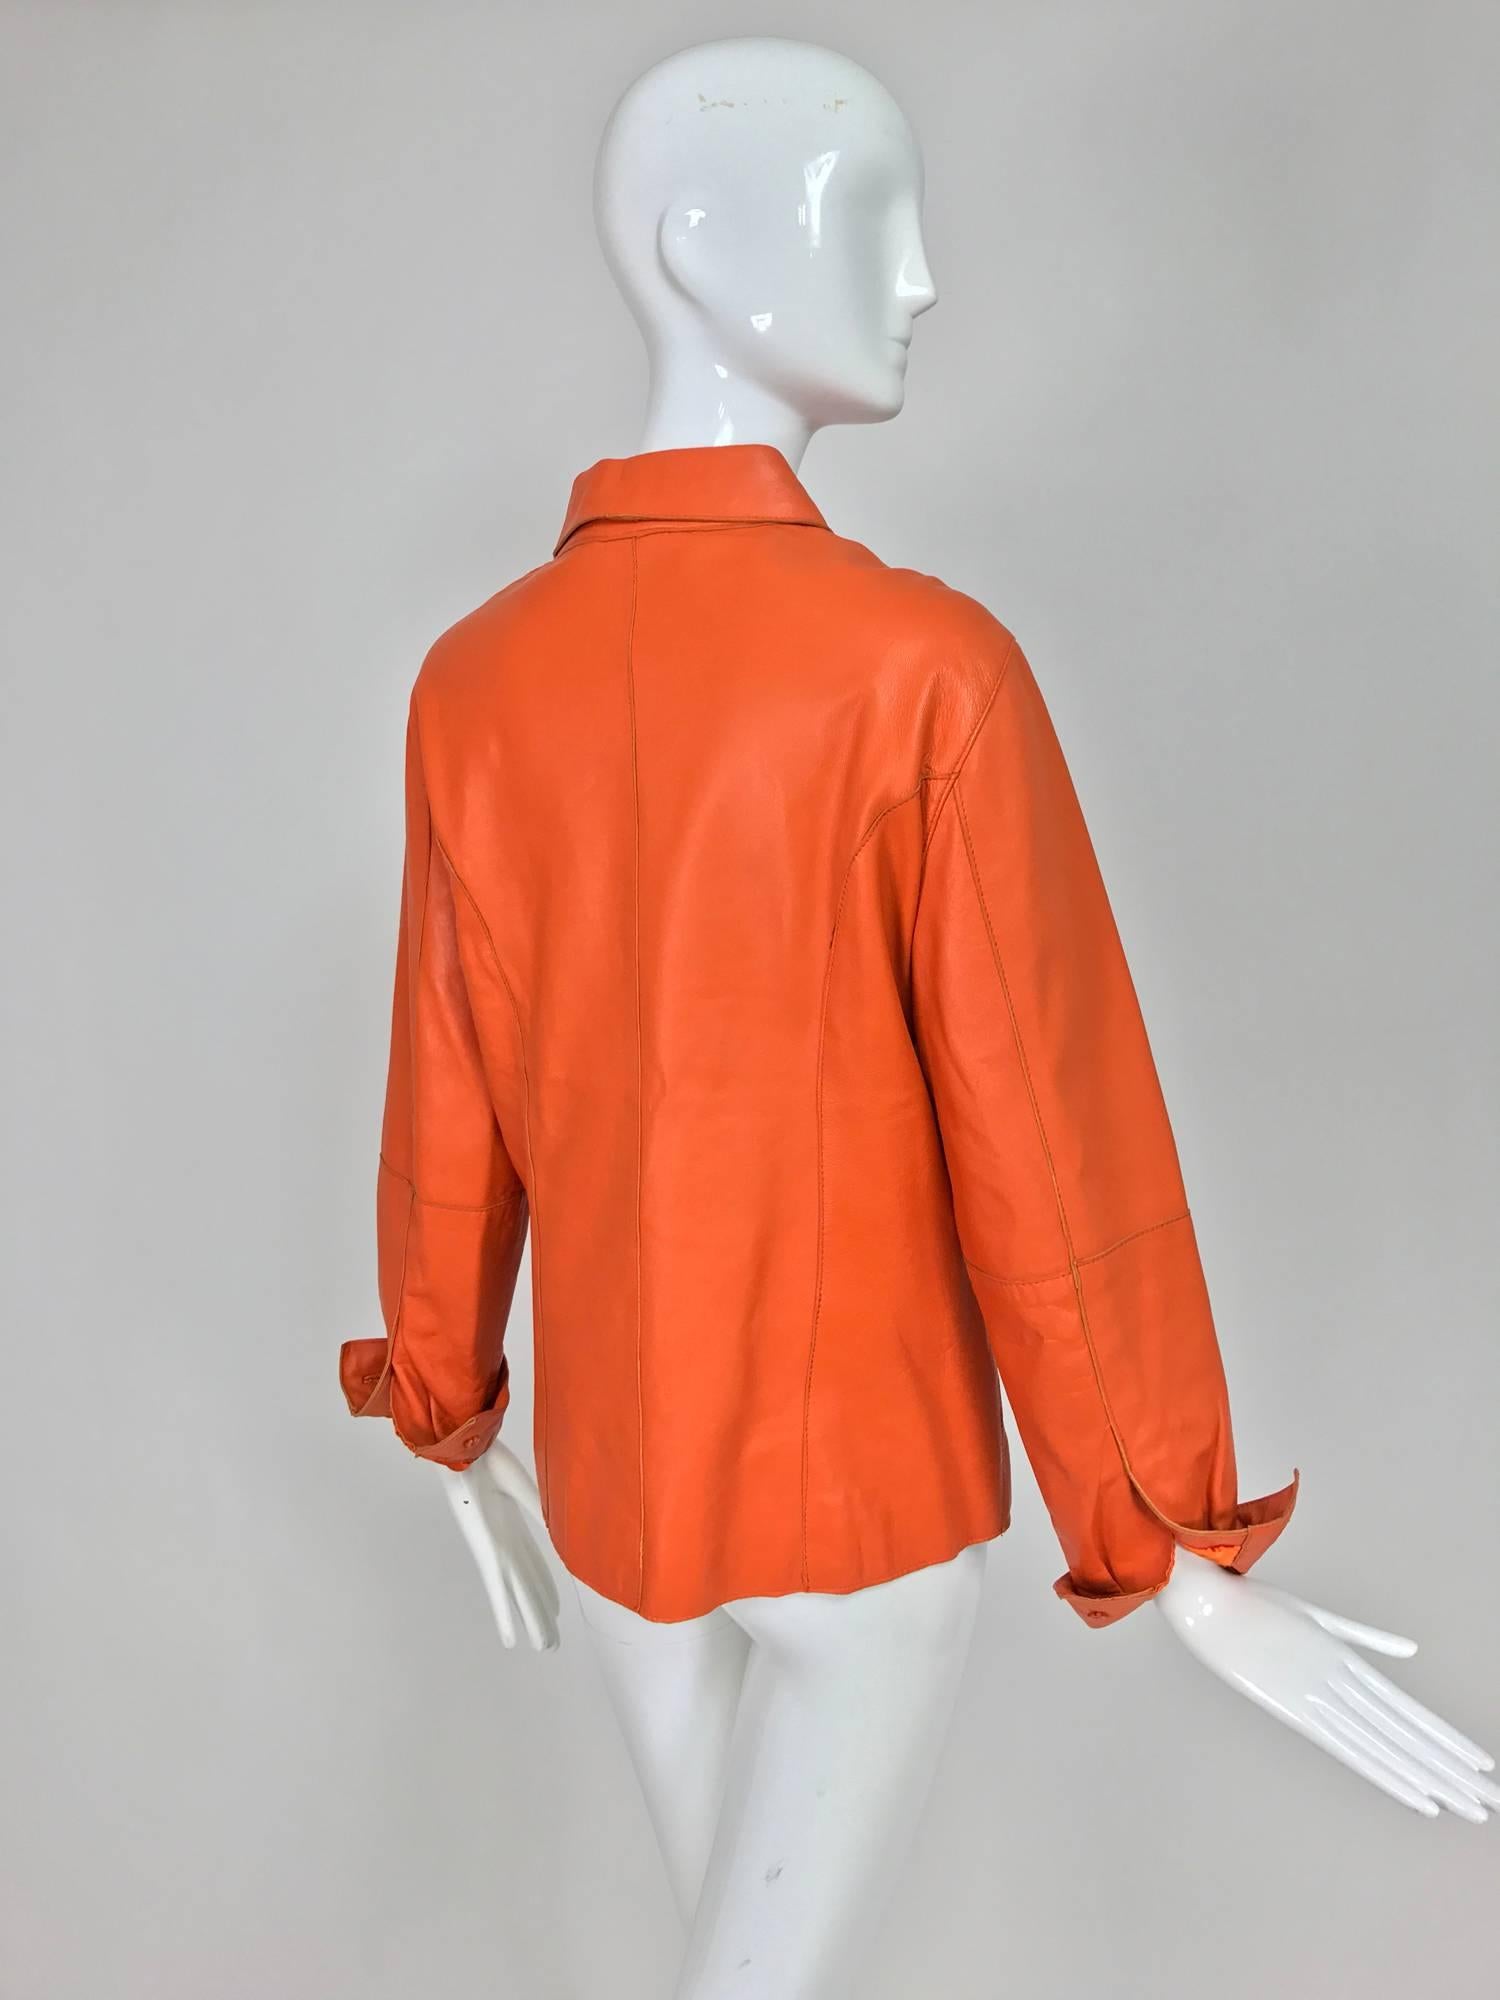 Women's Vintage orange leather button front shirt jacket 1970s